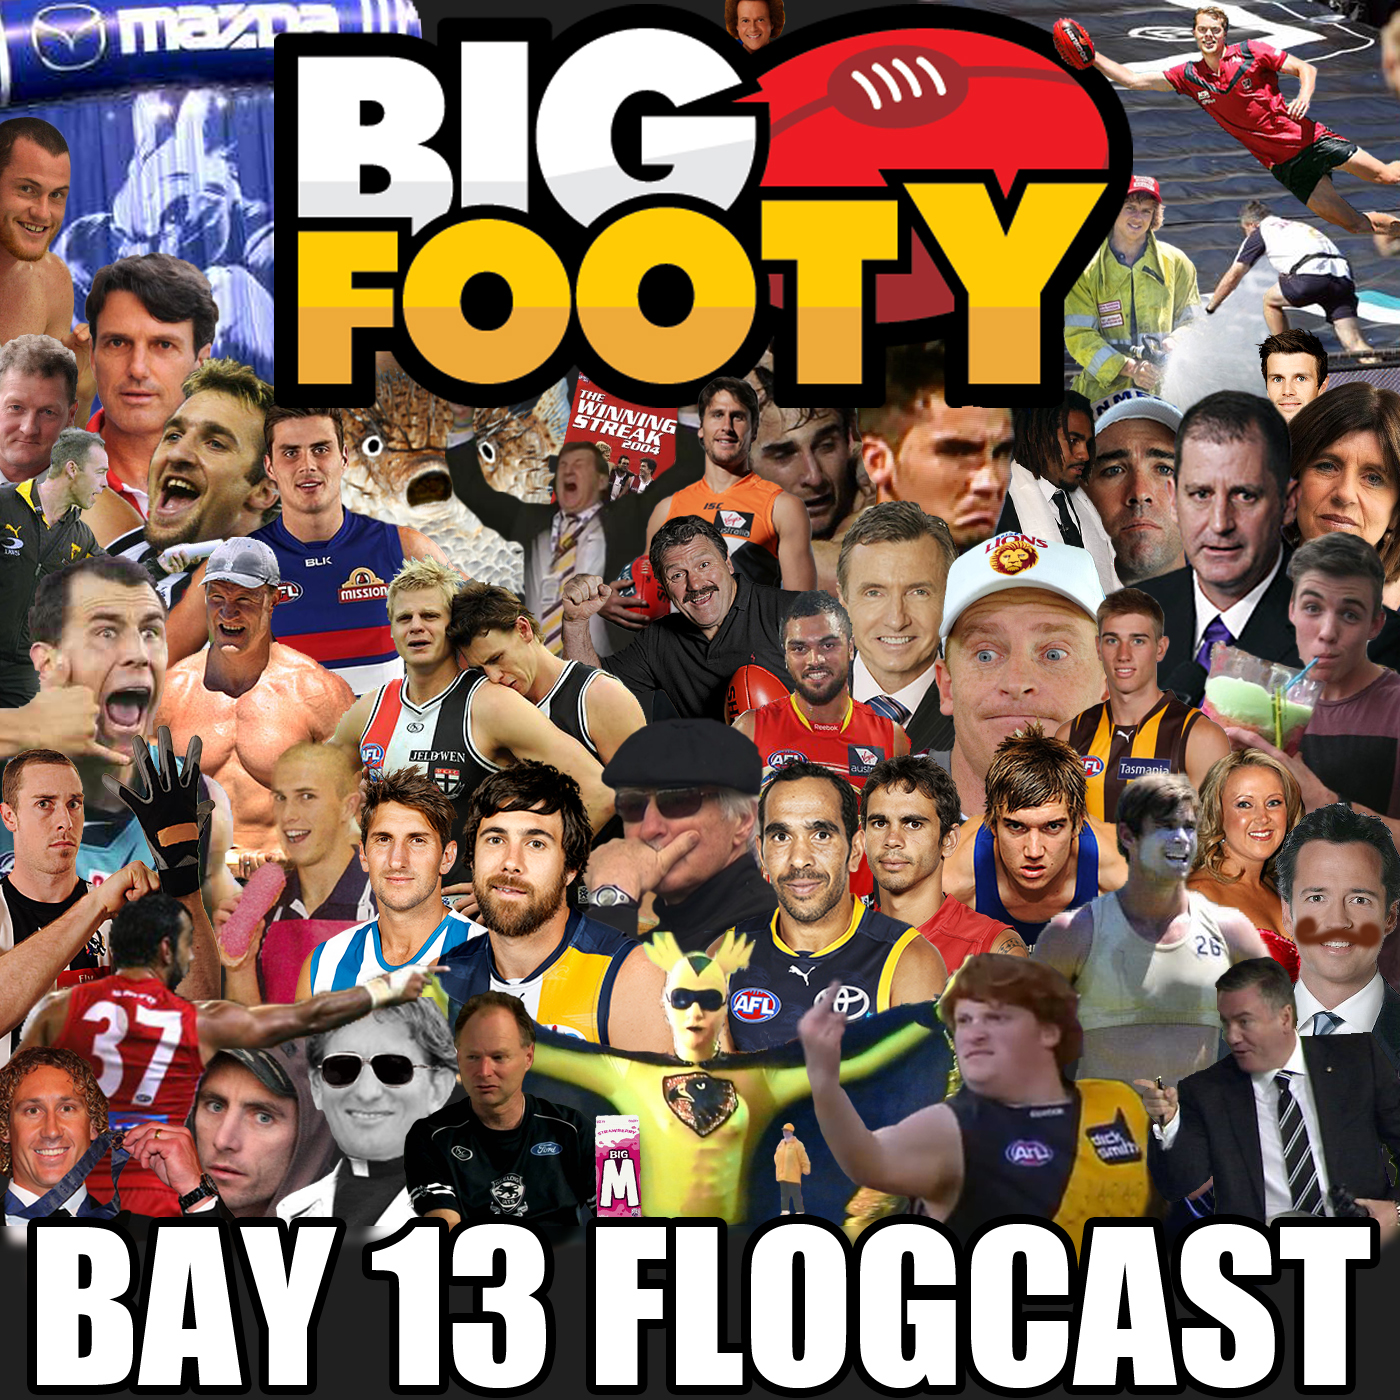 The Bay 13 Flogcast from BigFooty.com